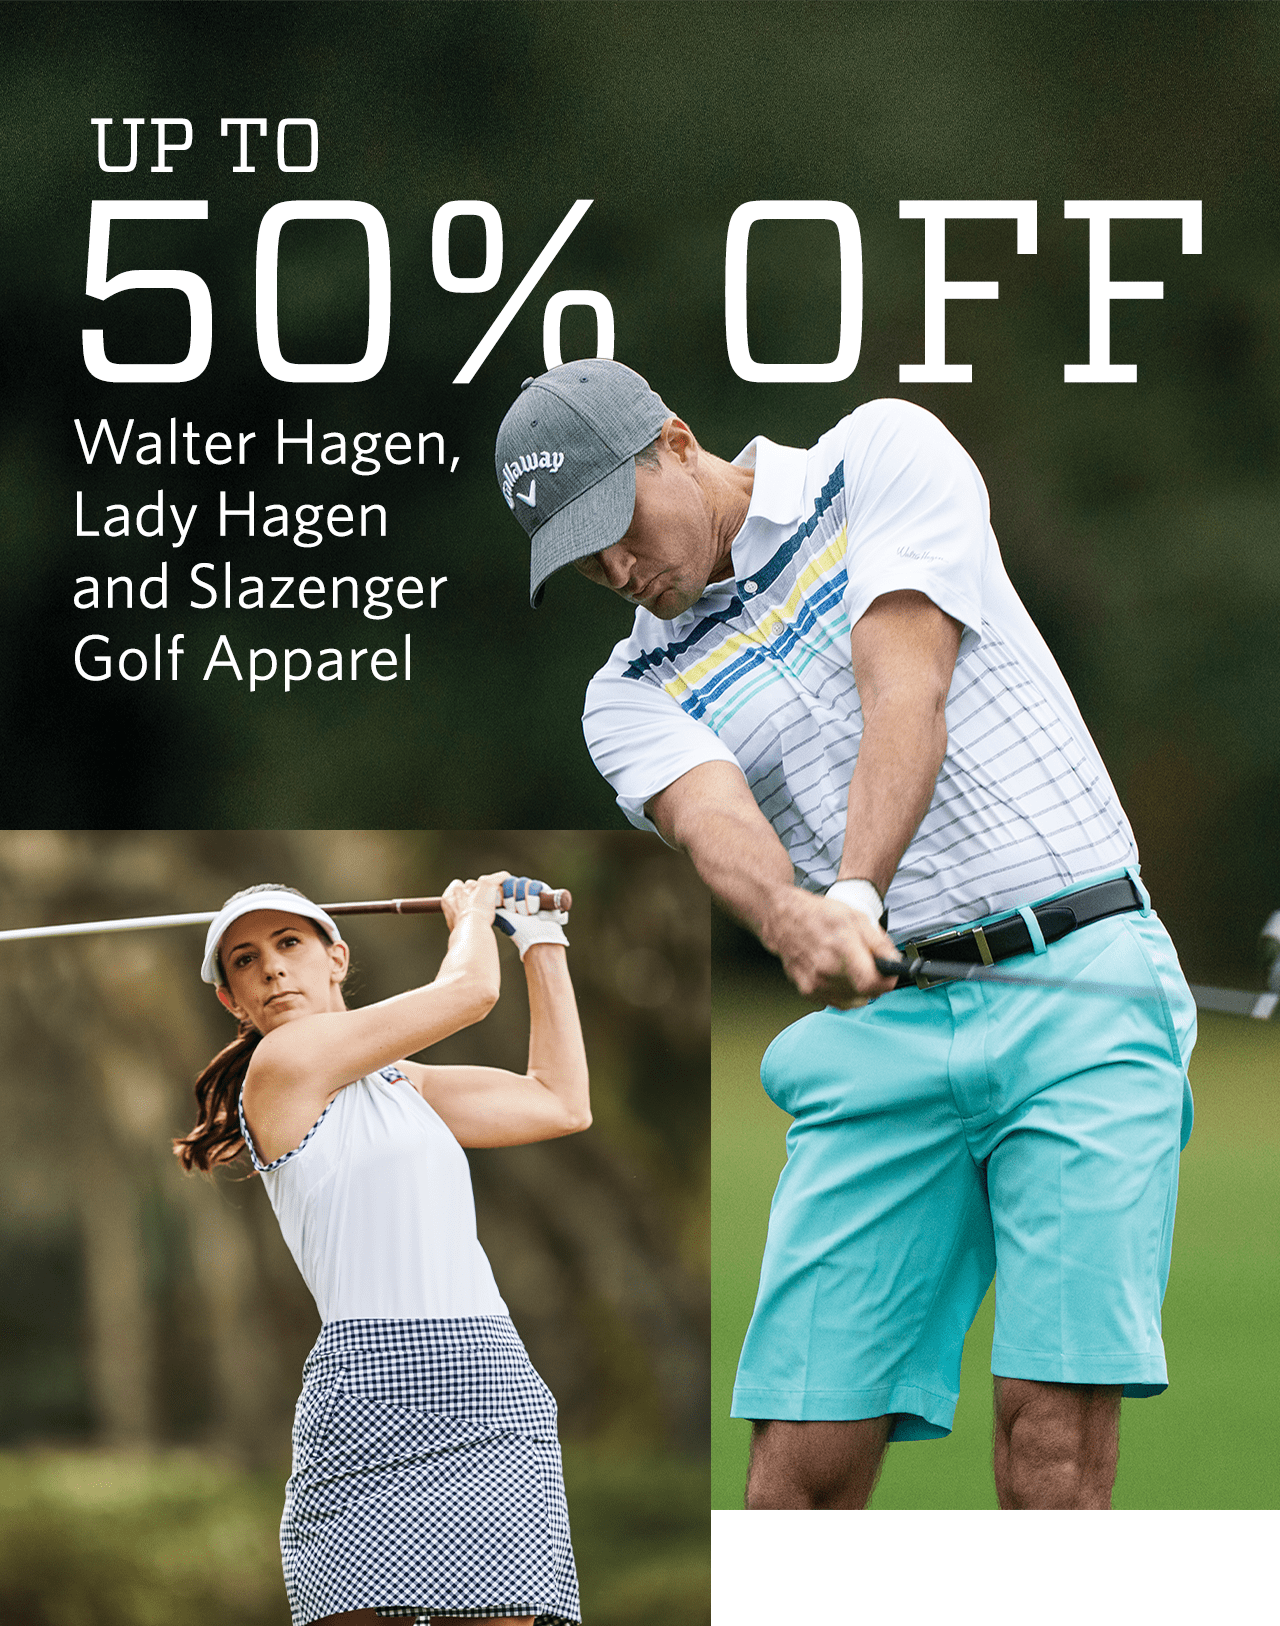 Up to 50% Off Walter Hagen, Lady Hagen and Slazenger Golf Apparel.